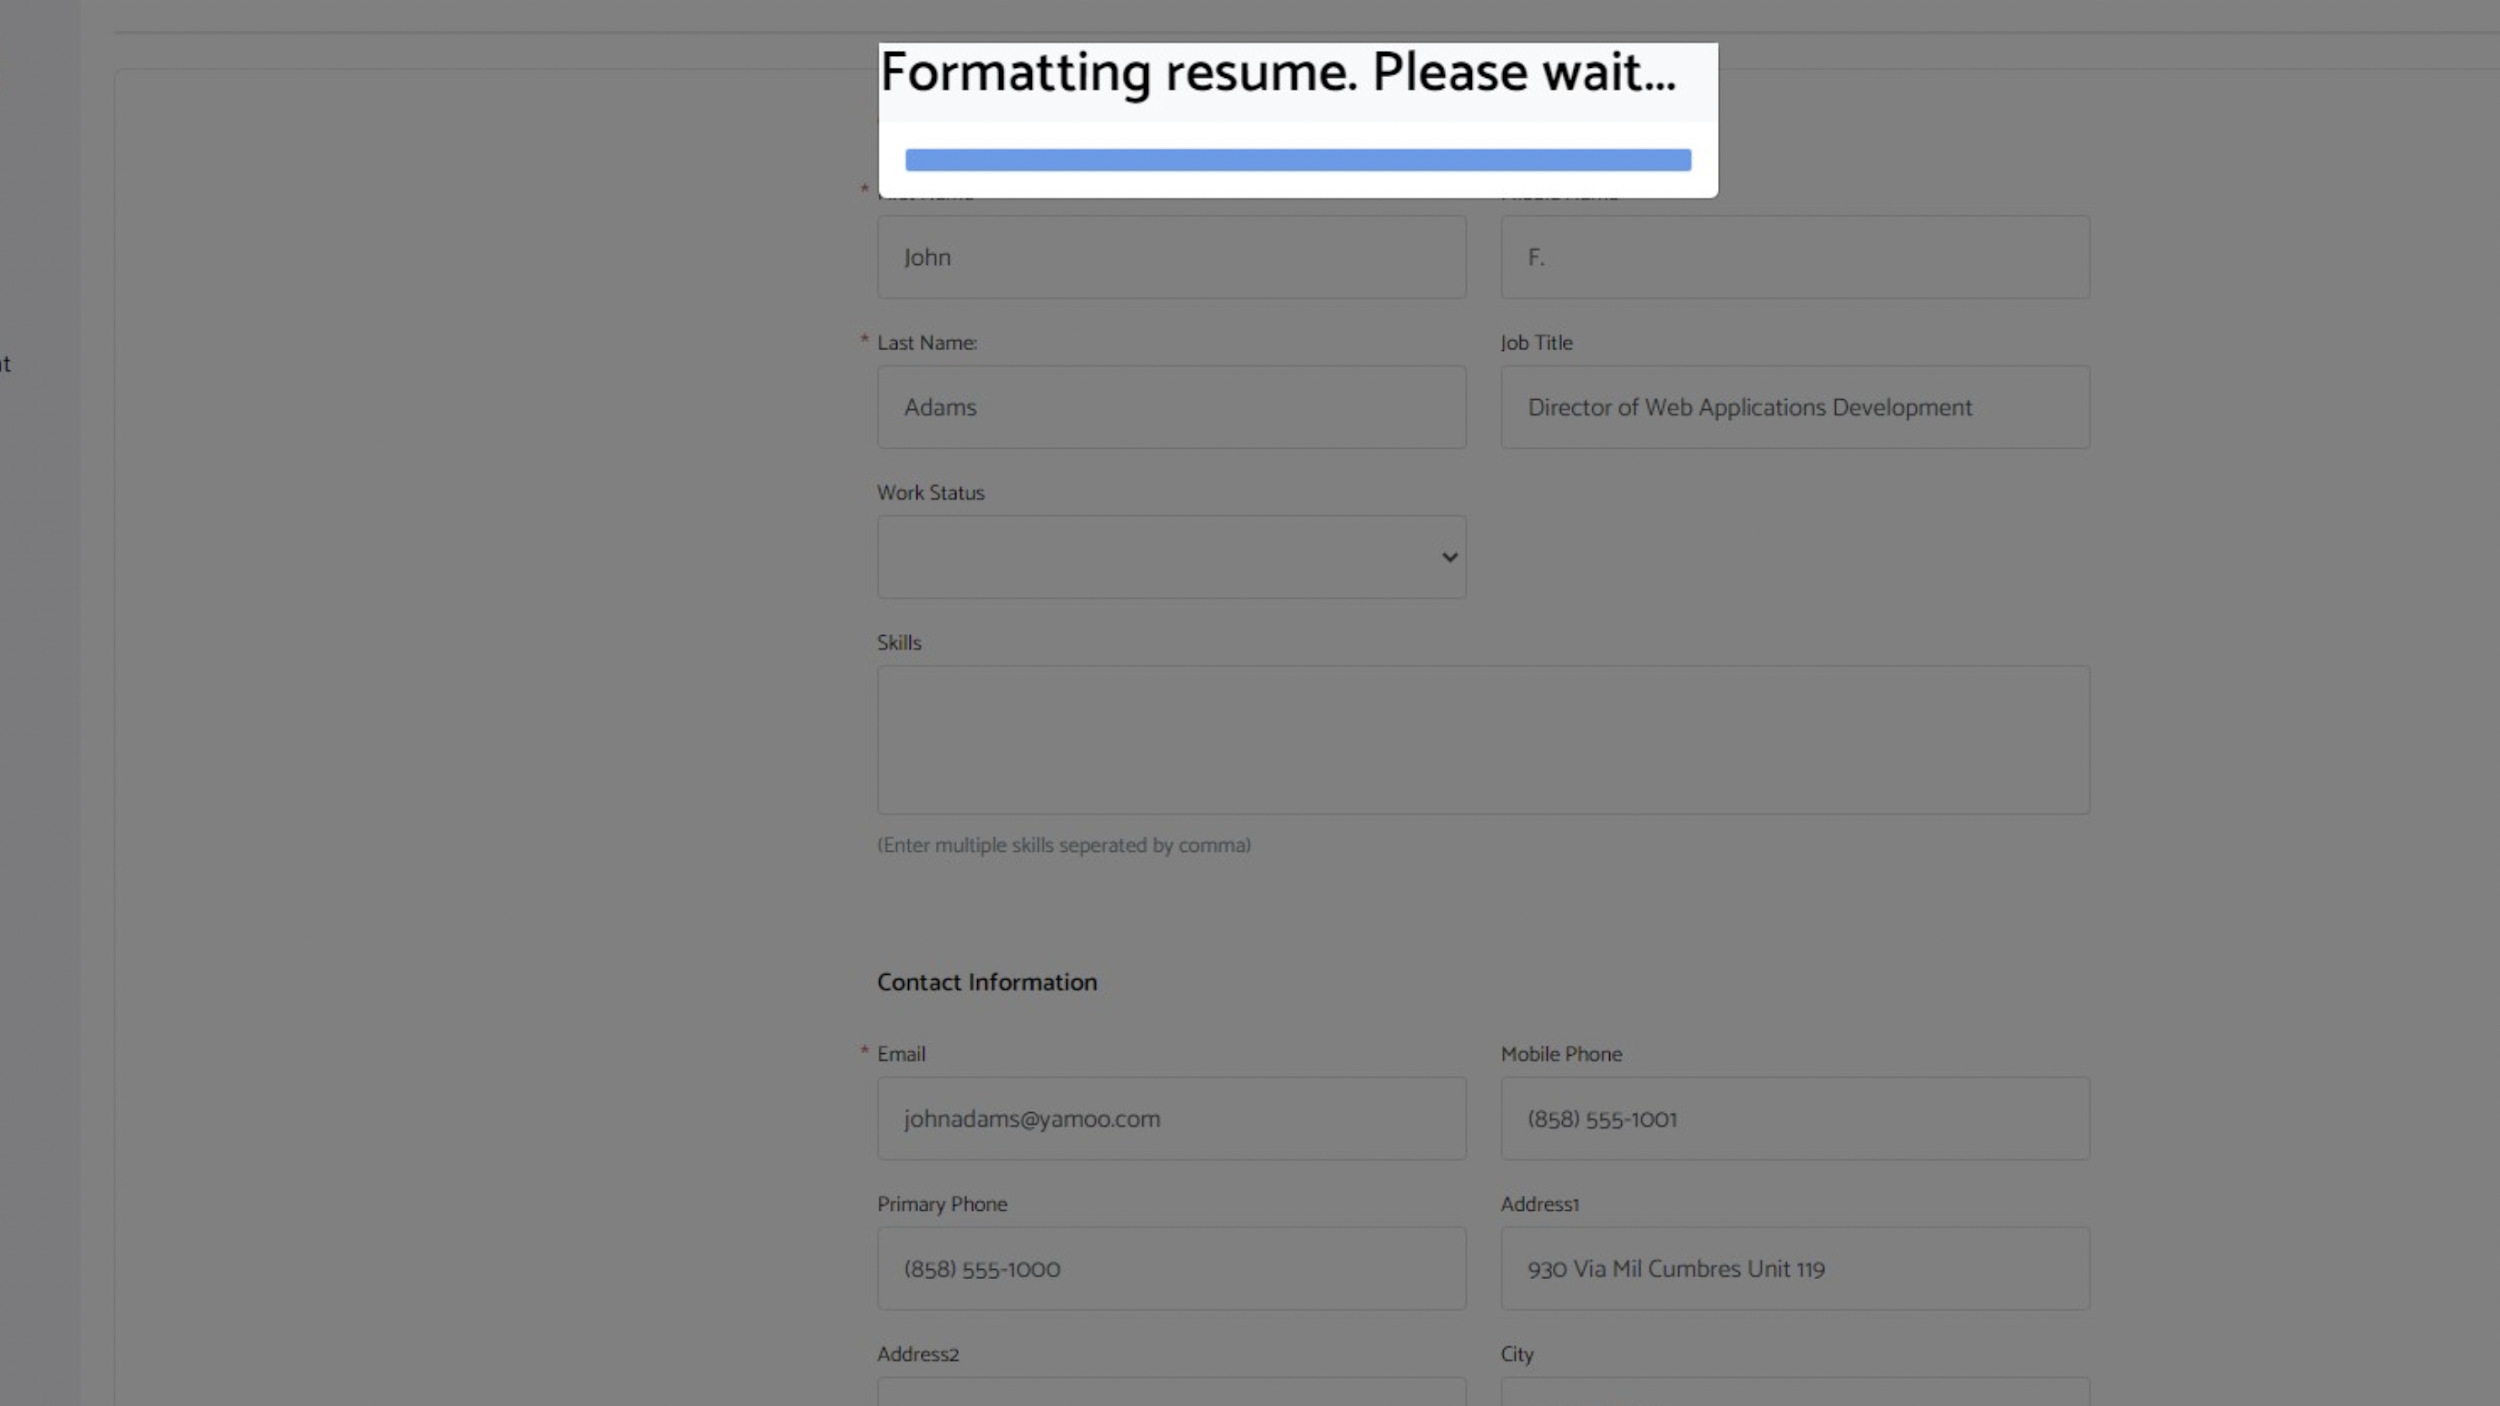 iReformat formatting resume. Please wait.